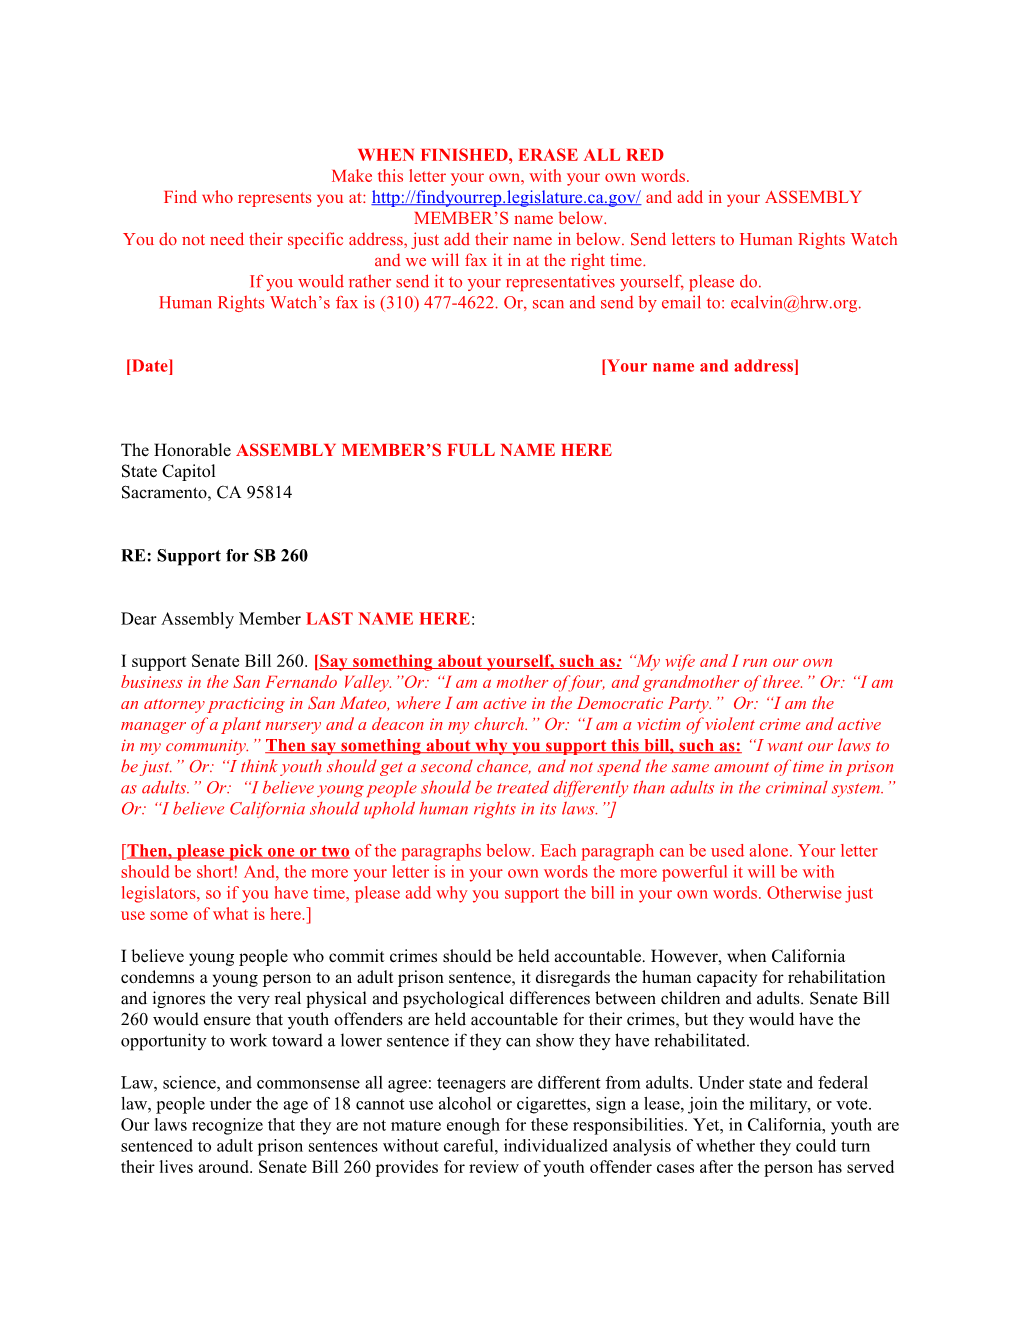 Sample Letter of Support for SB 1199